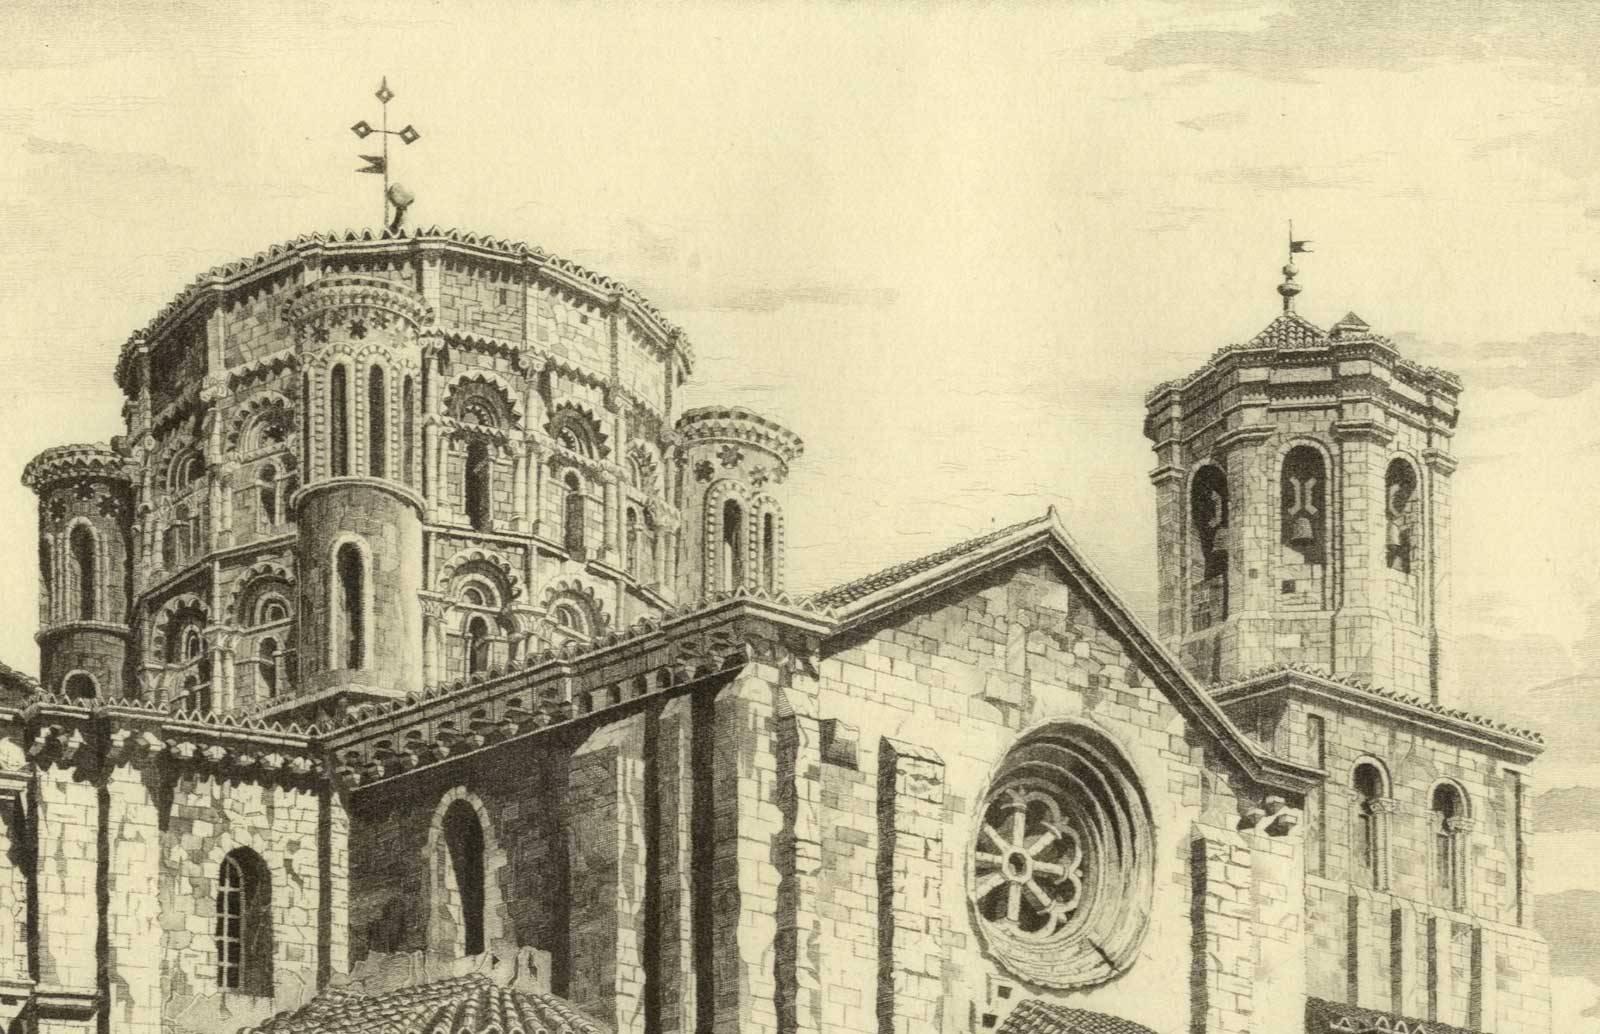 La Colegiata Toro (Romanesque Santa Maria la Mayor/Zamora province Spain) - Print by John Taylor Arms